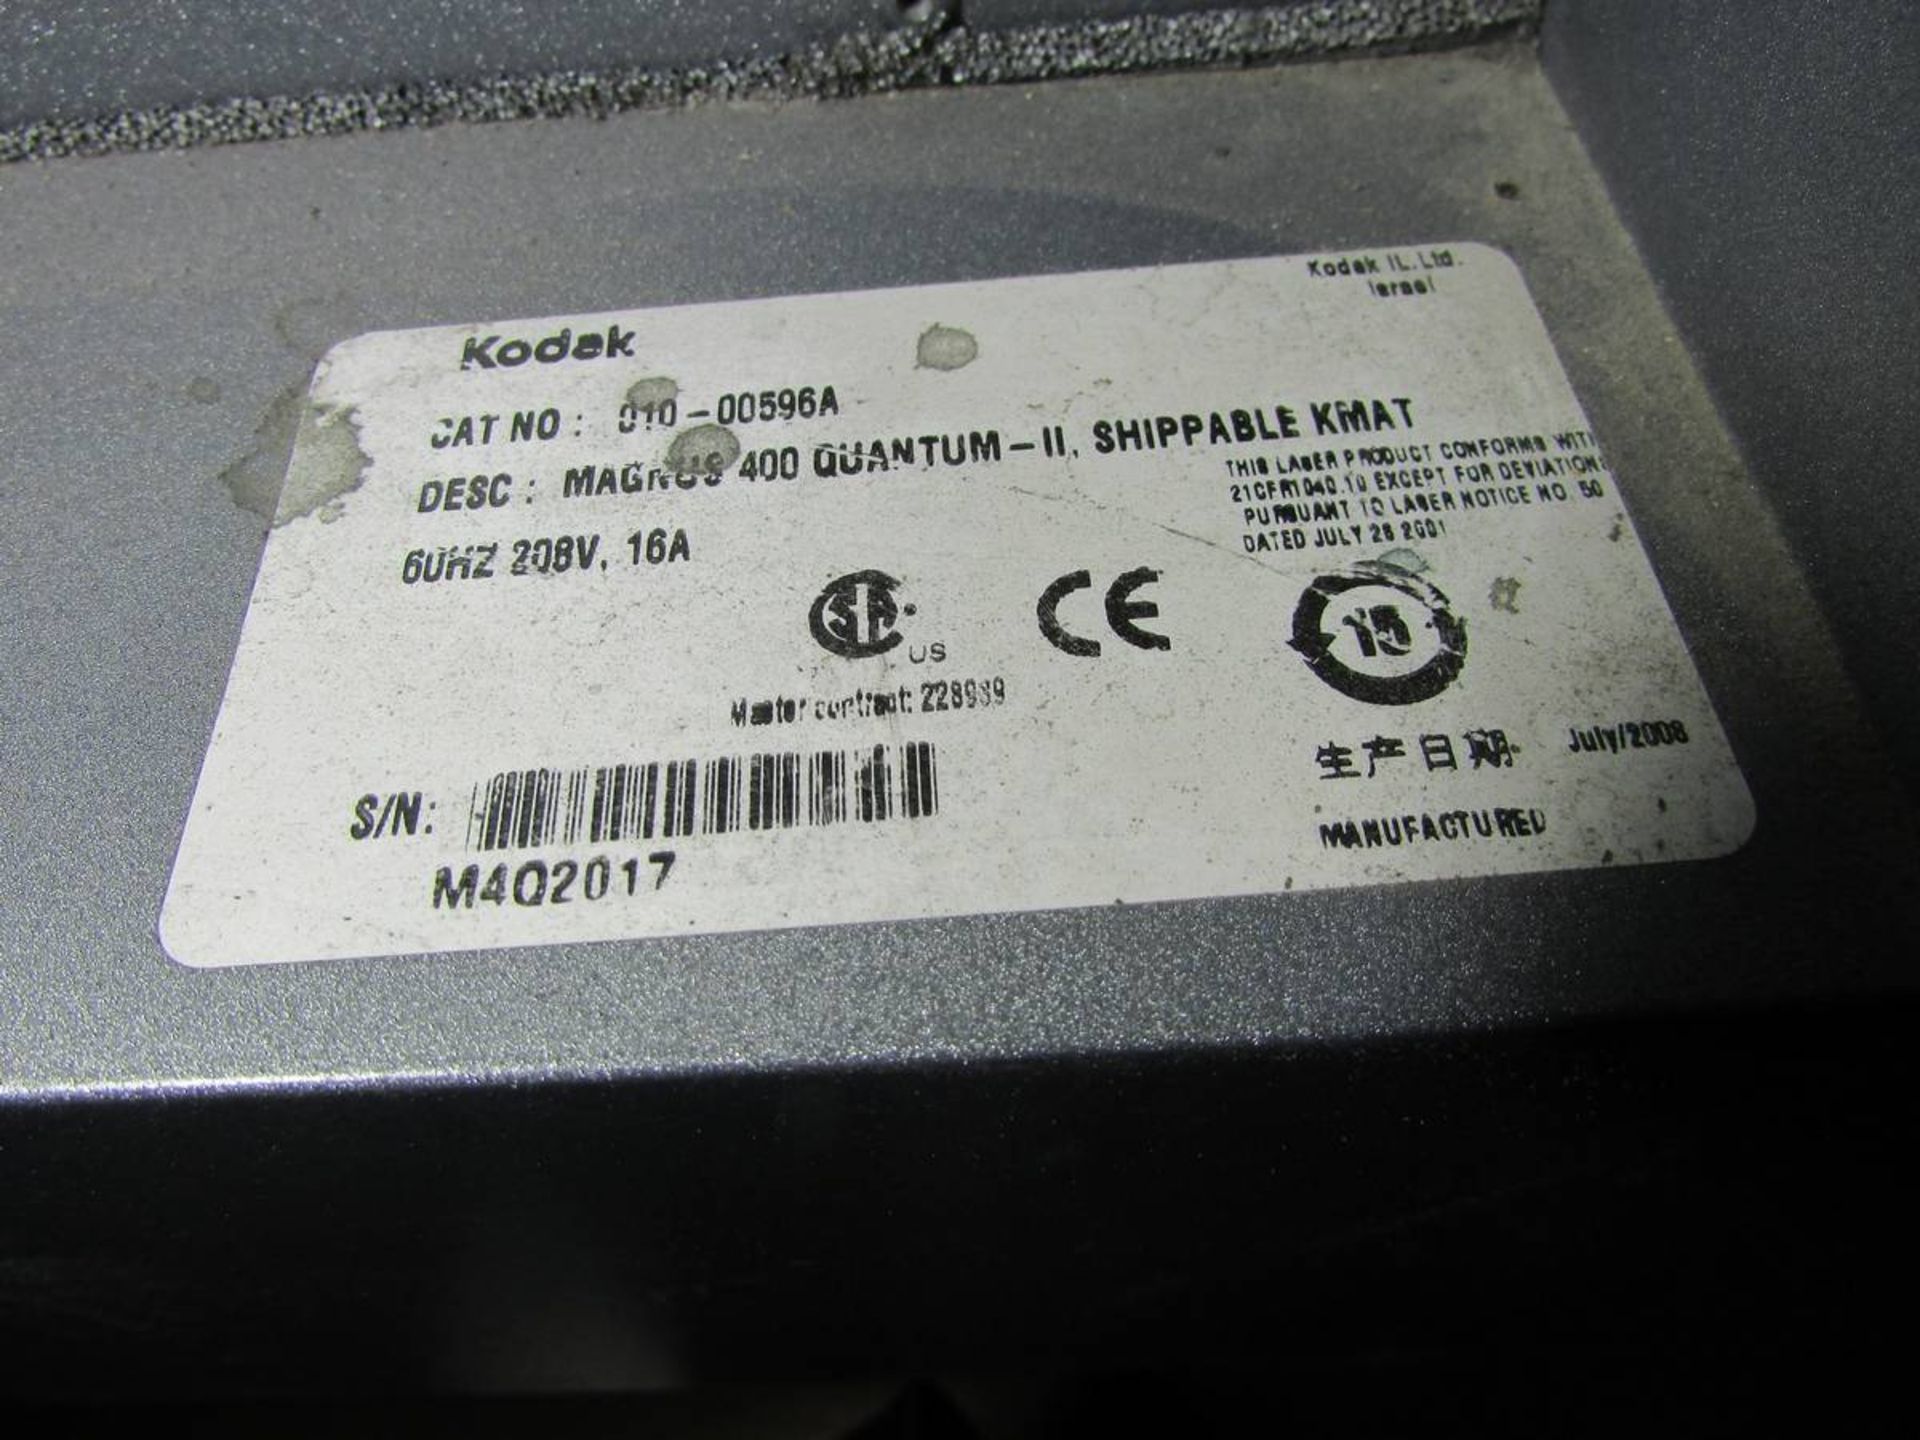 2008 Kodak Magnus 400 II Quantum Platesetter CTP w/ Prinergy RIP - Image 20 of 32